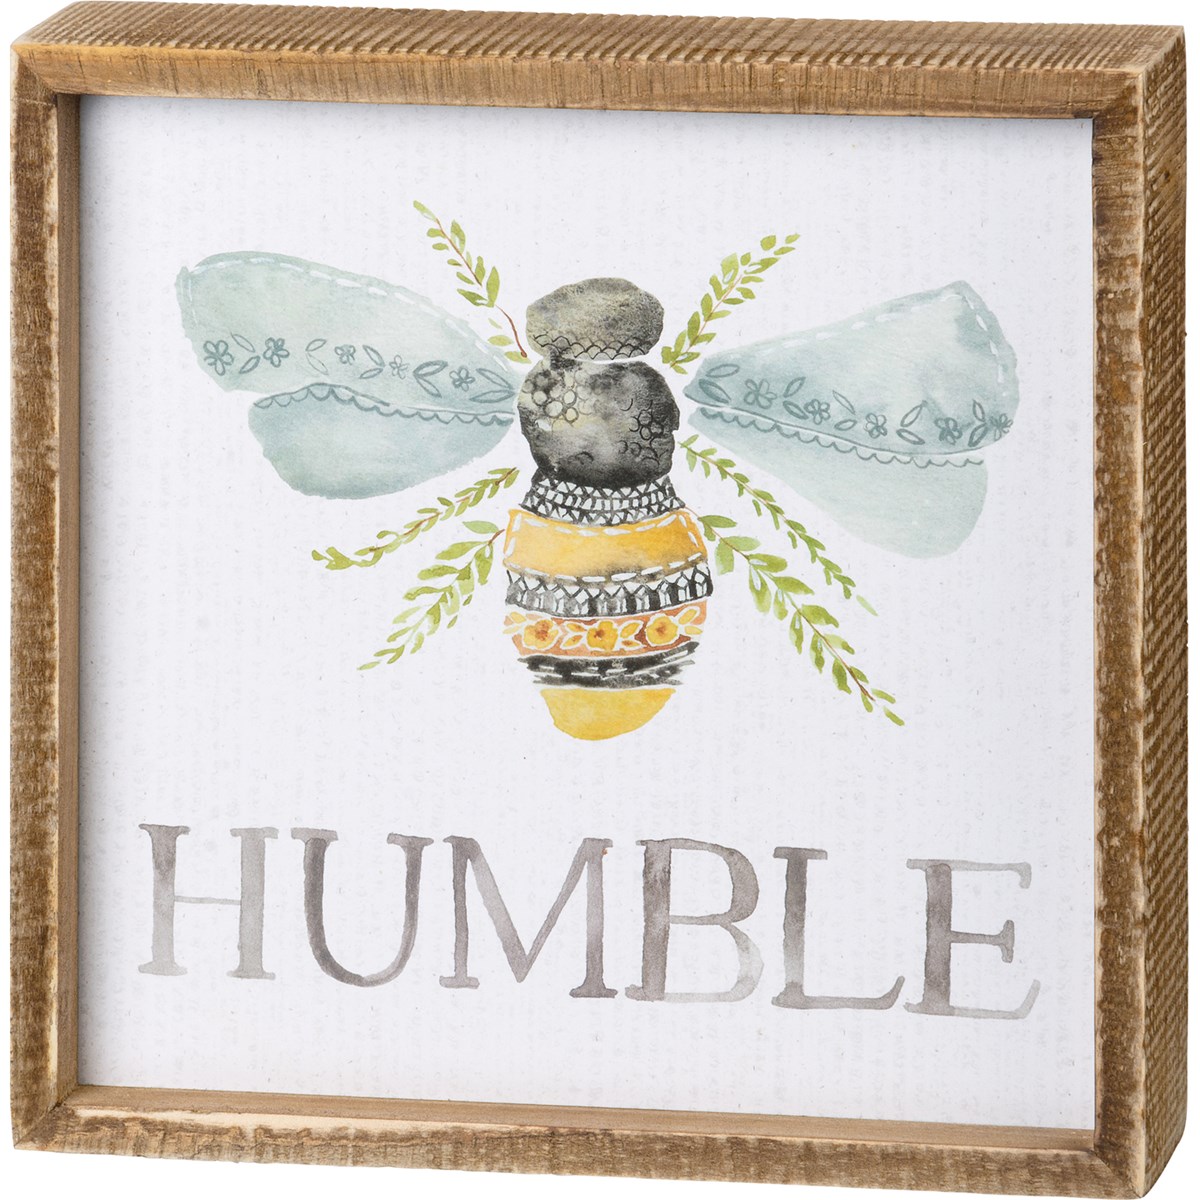 Humble Inset Box Sign - Wood, Paper